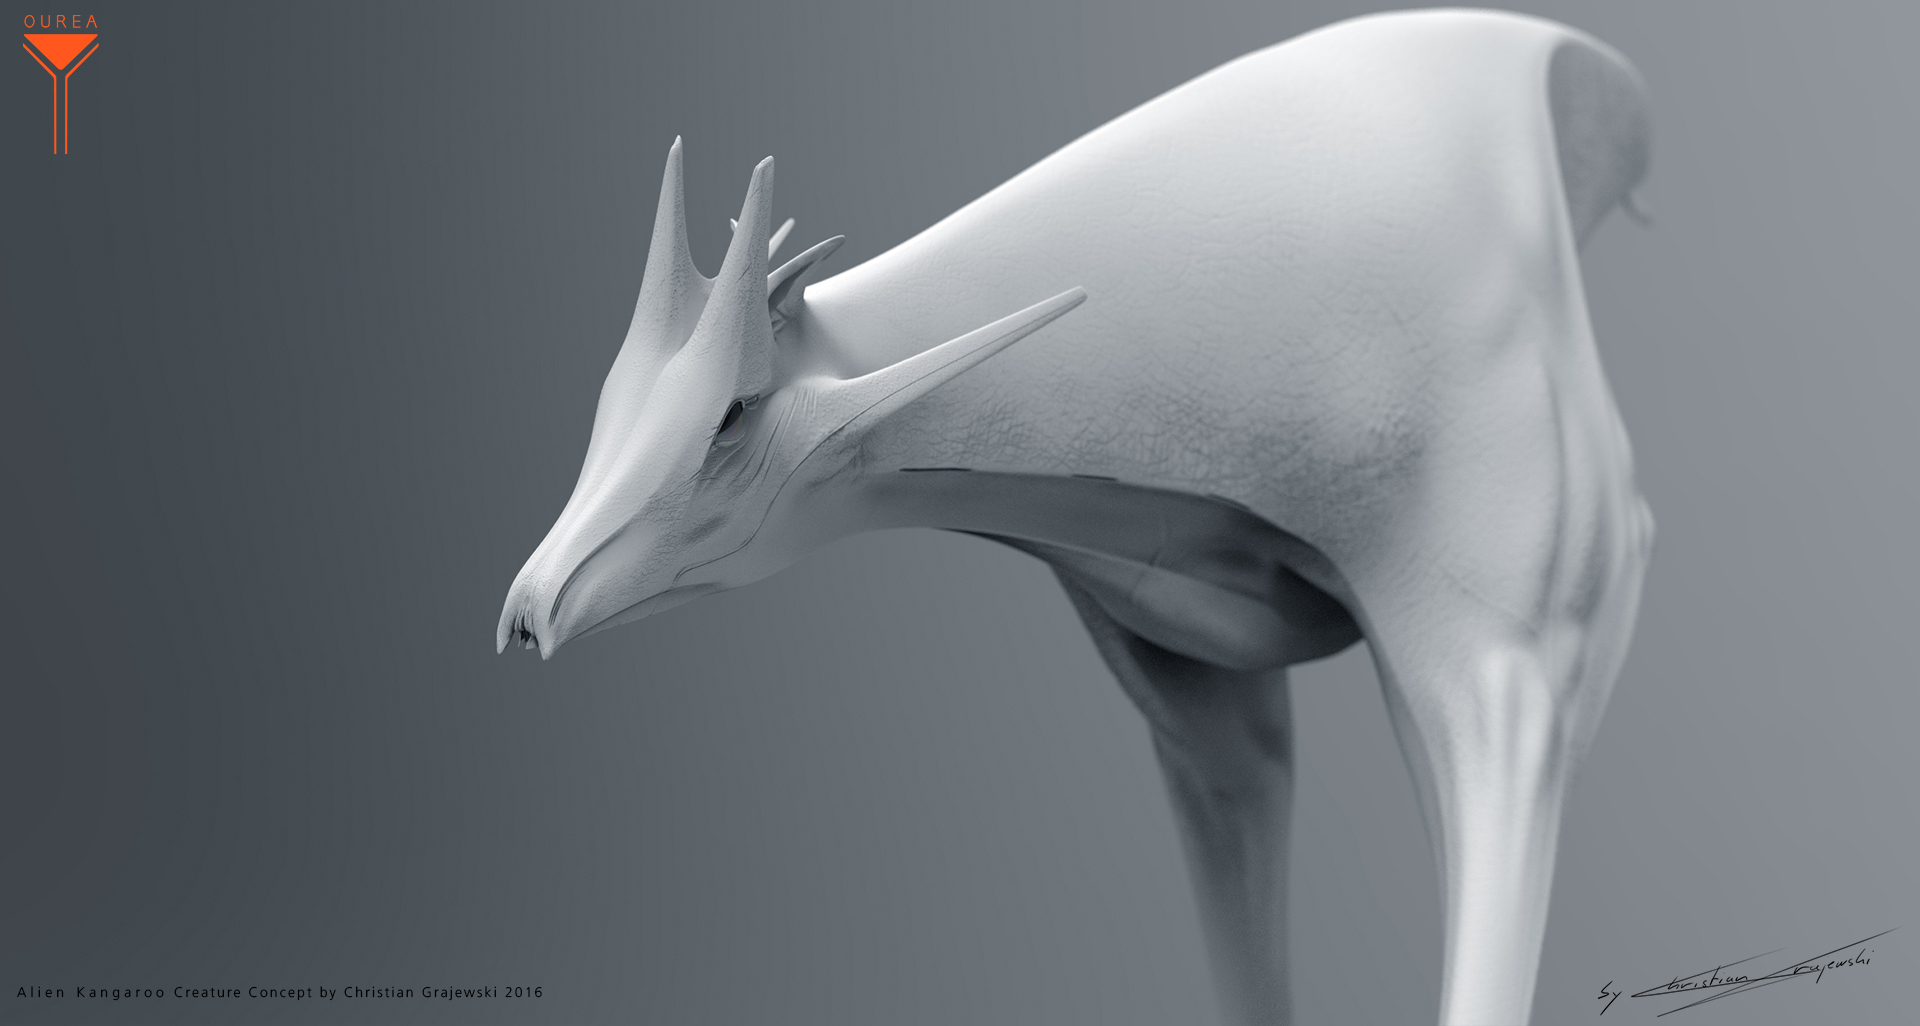 Alien Kangaroo Creature Concept 04 by Christian Grajewski.jpg